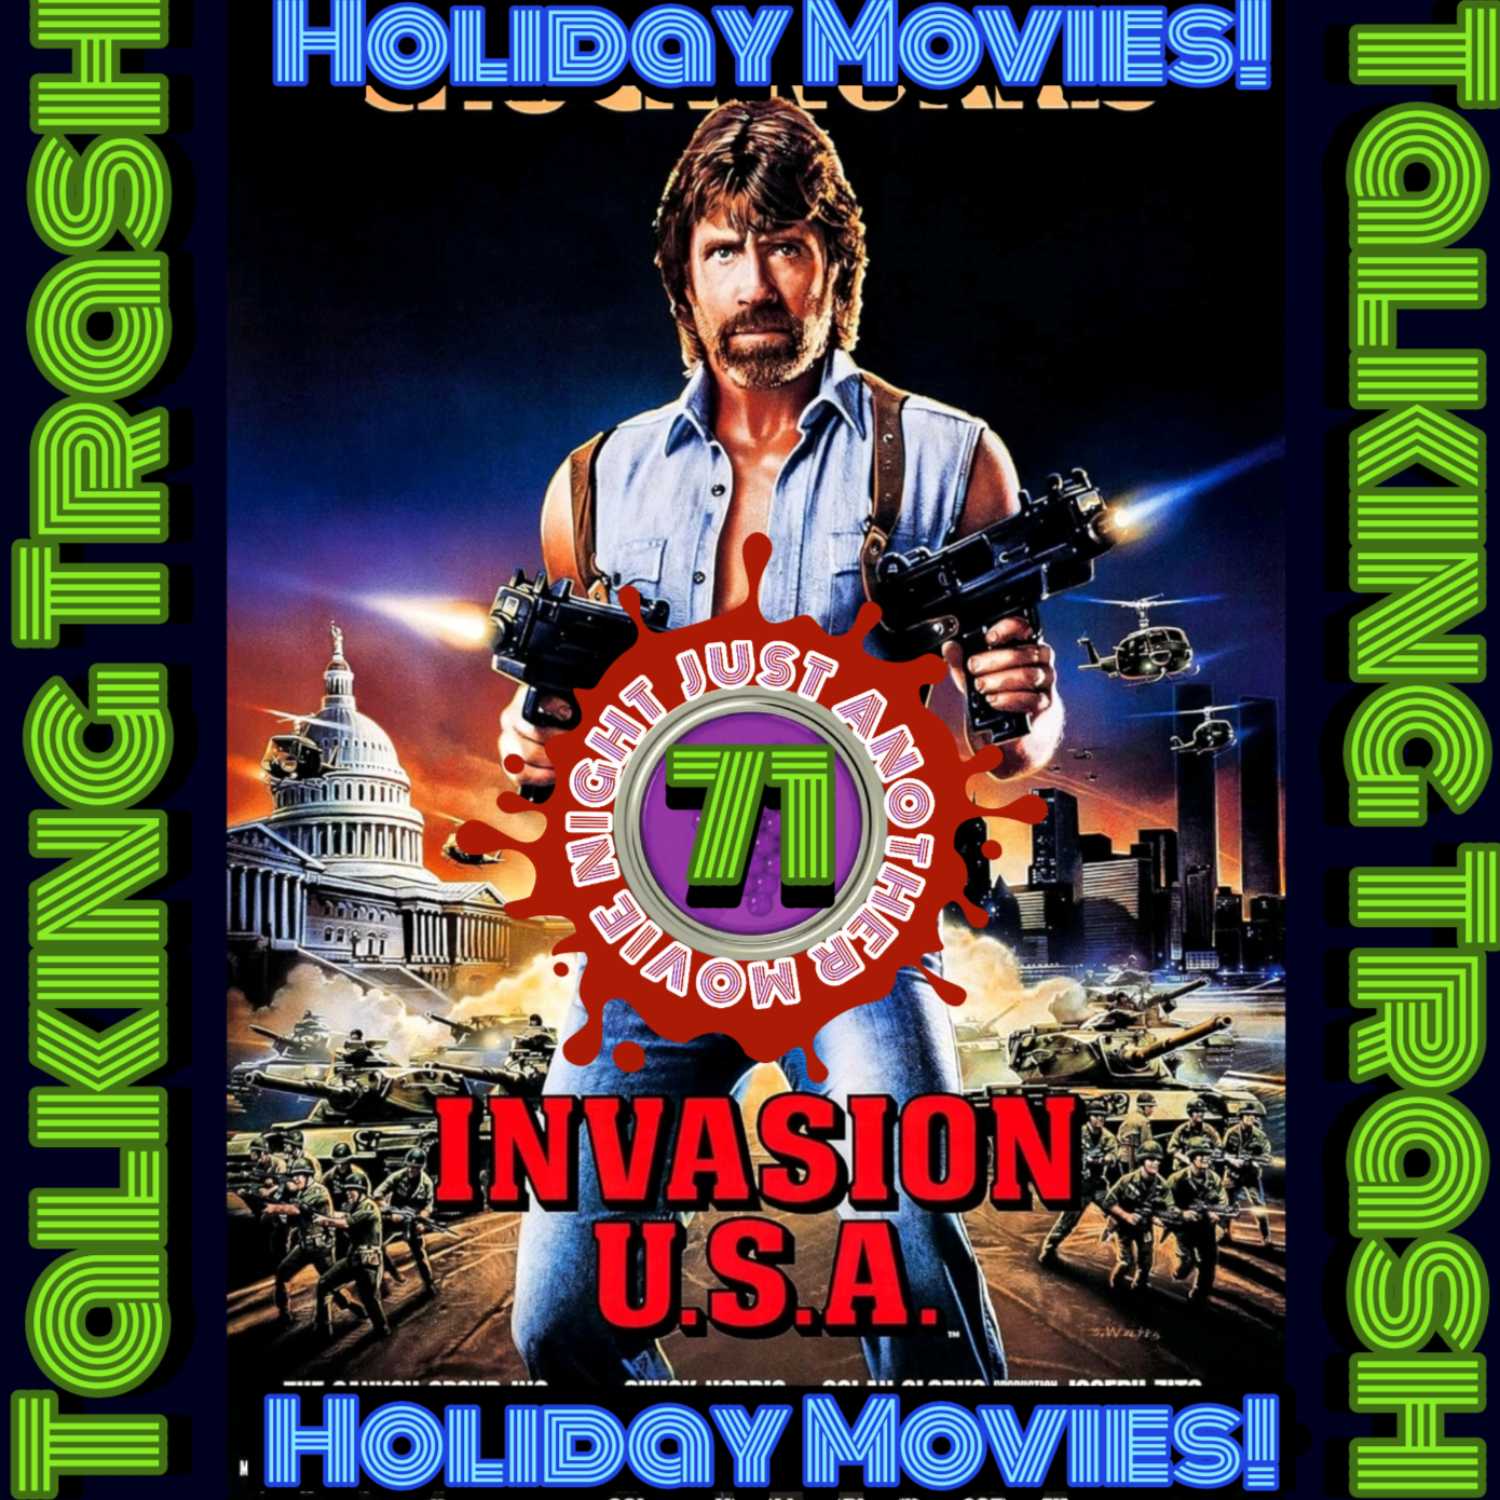 Talking Trash Episode 71: Invasion USA (Holiday movies)